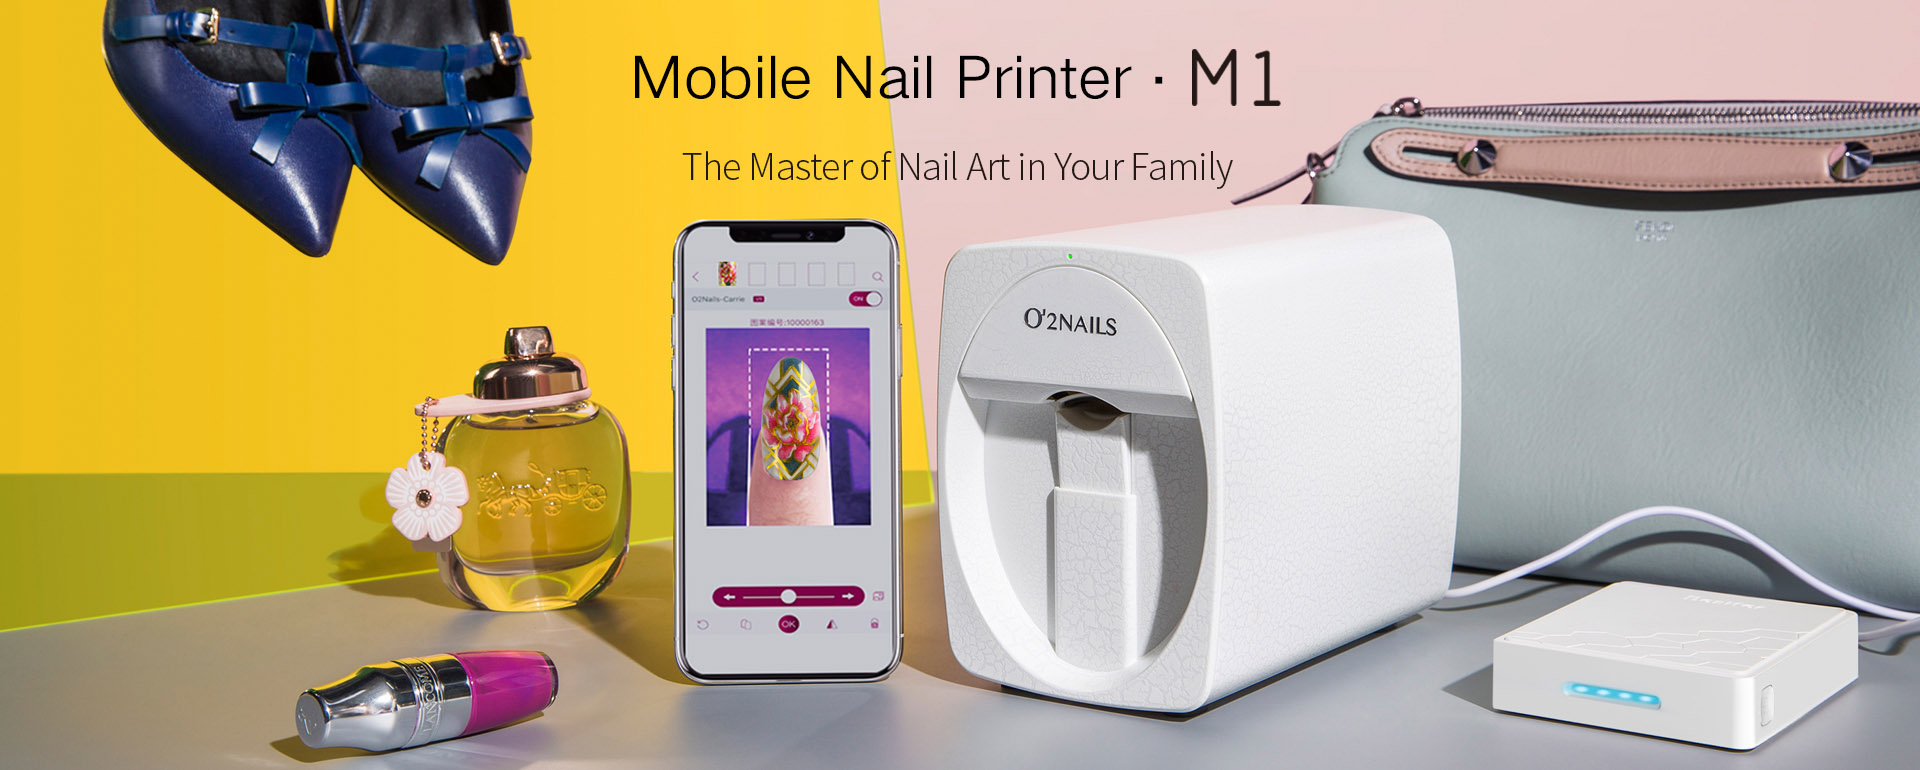 9. Digital Magic Nail Art Machine - Nail Art Printer - wide 5